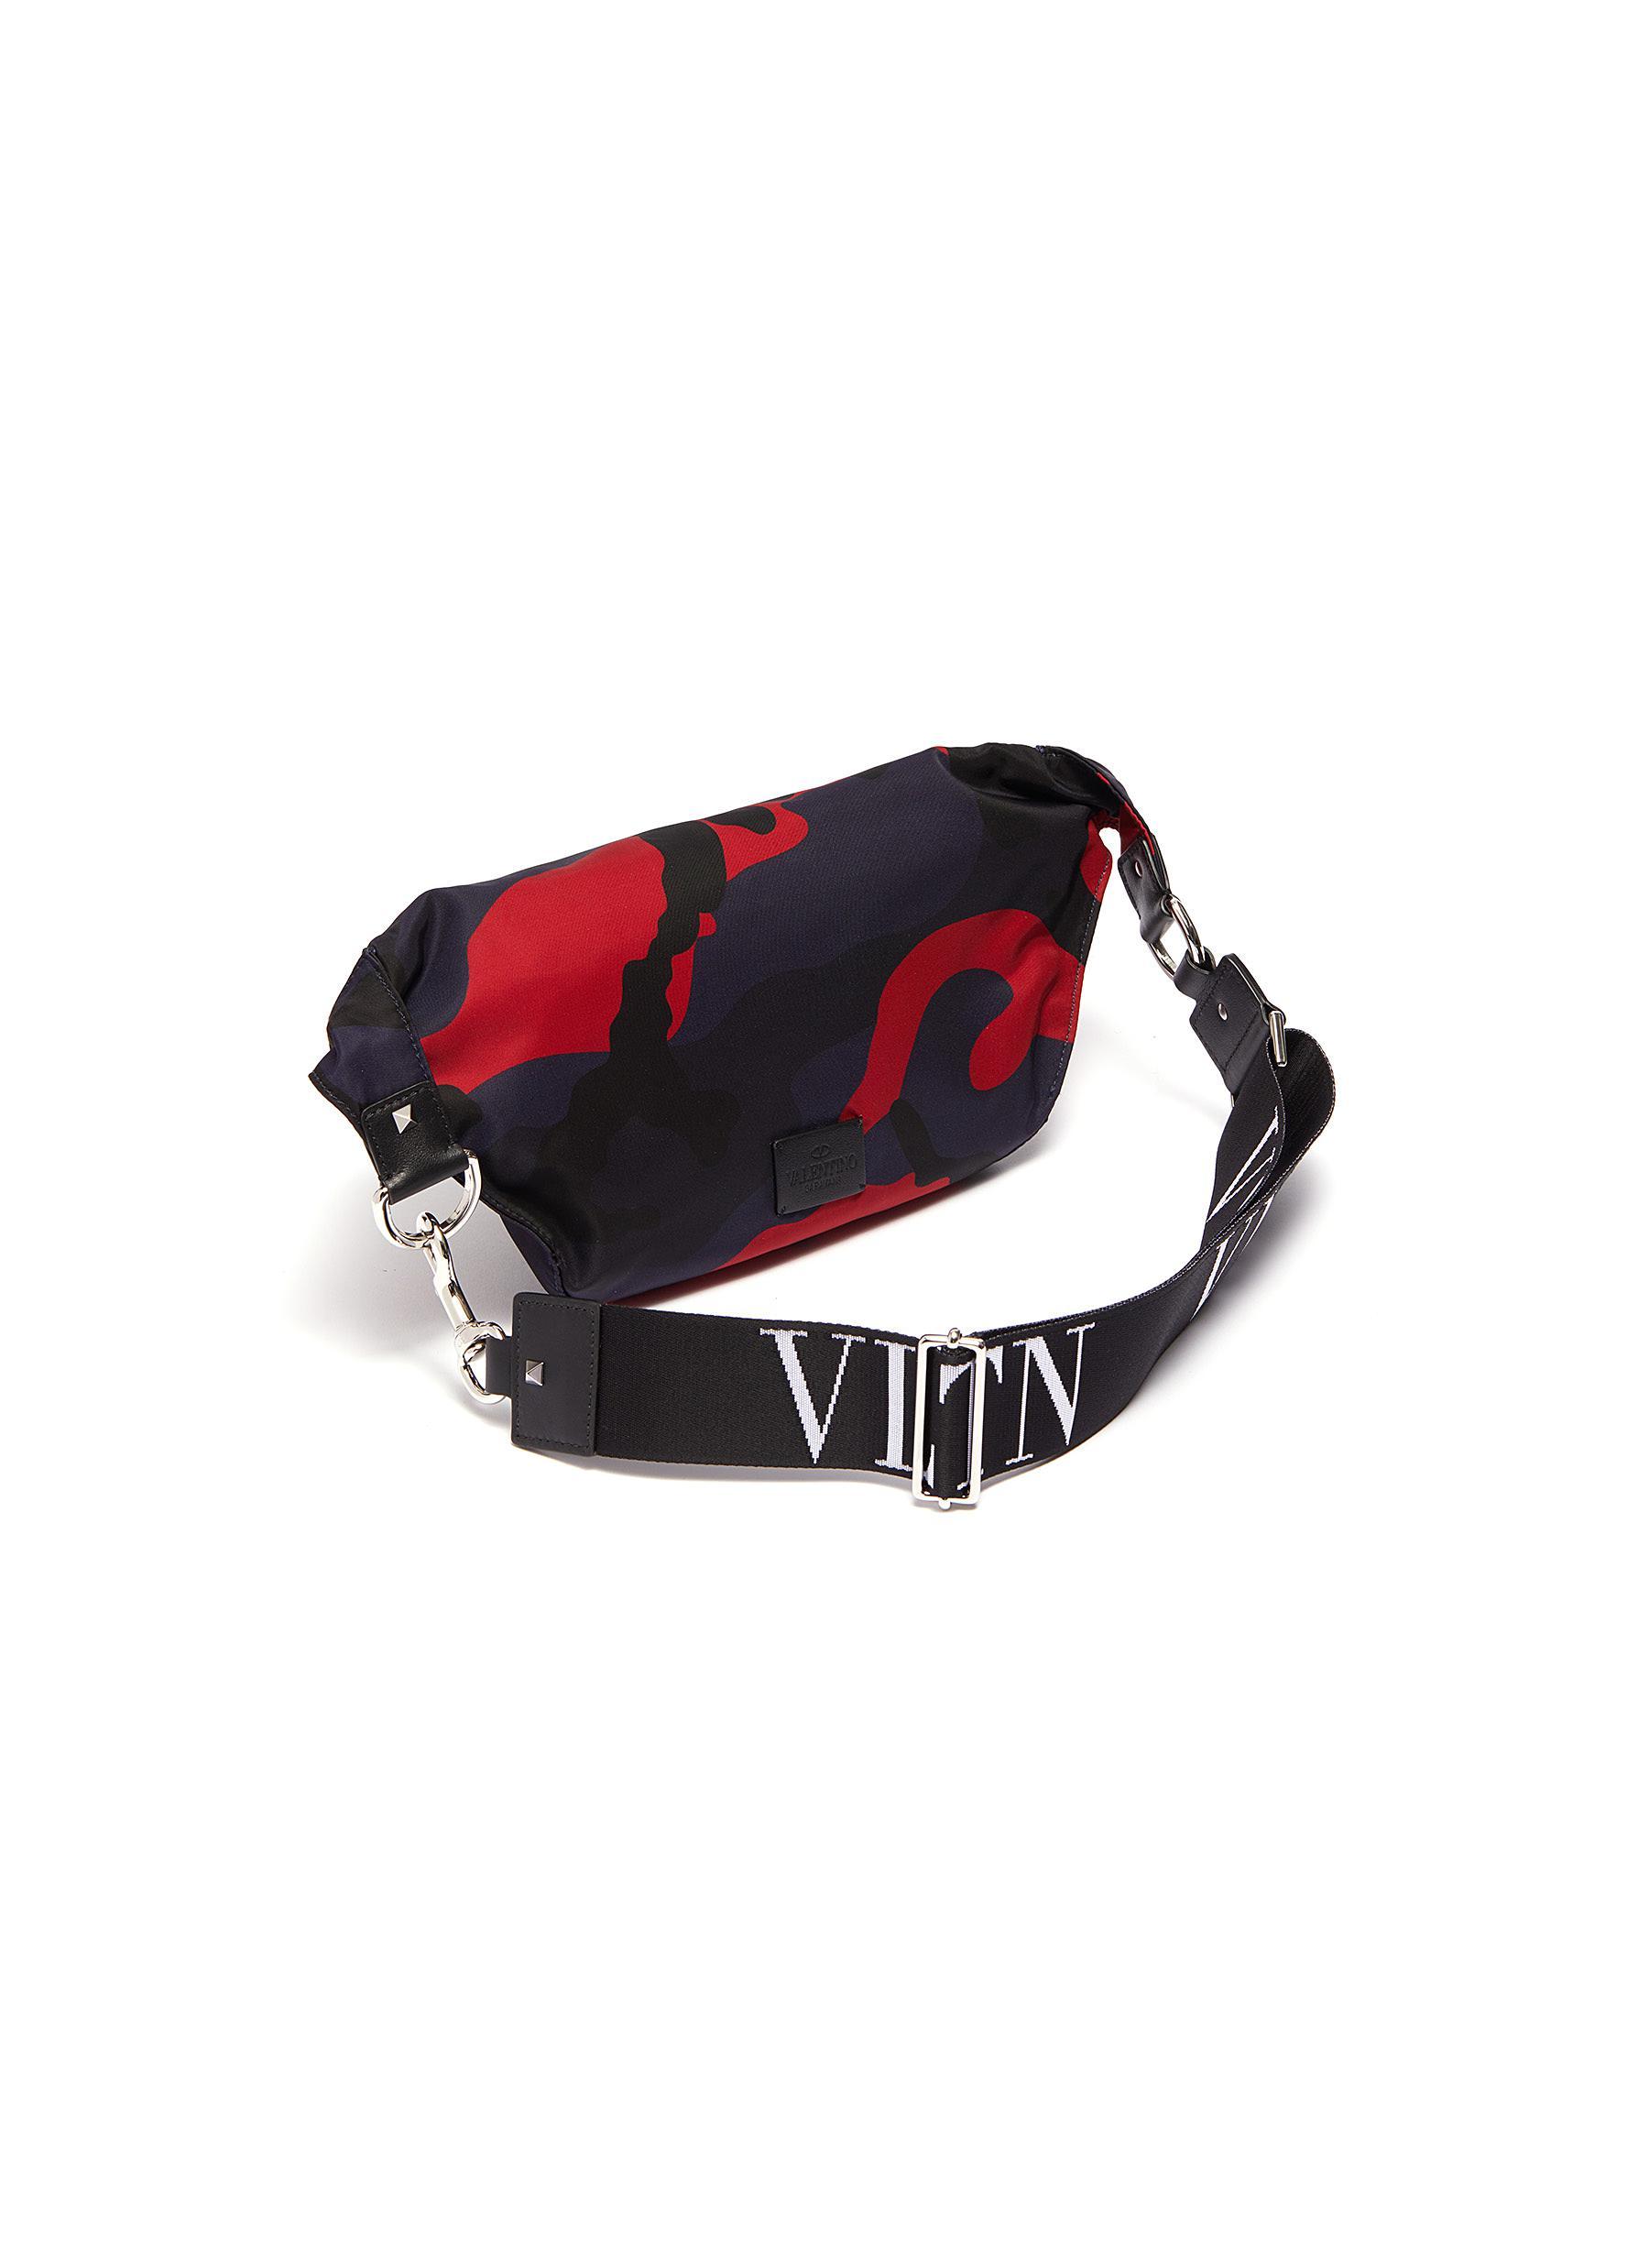 Valentino 'vltn' Logo Strap Camouflage Print Bum Bag in Blue for Men - Lyst